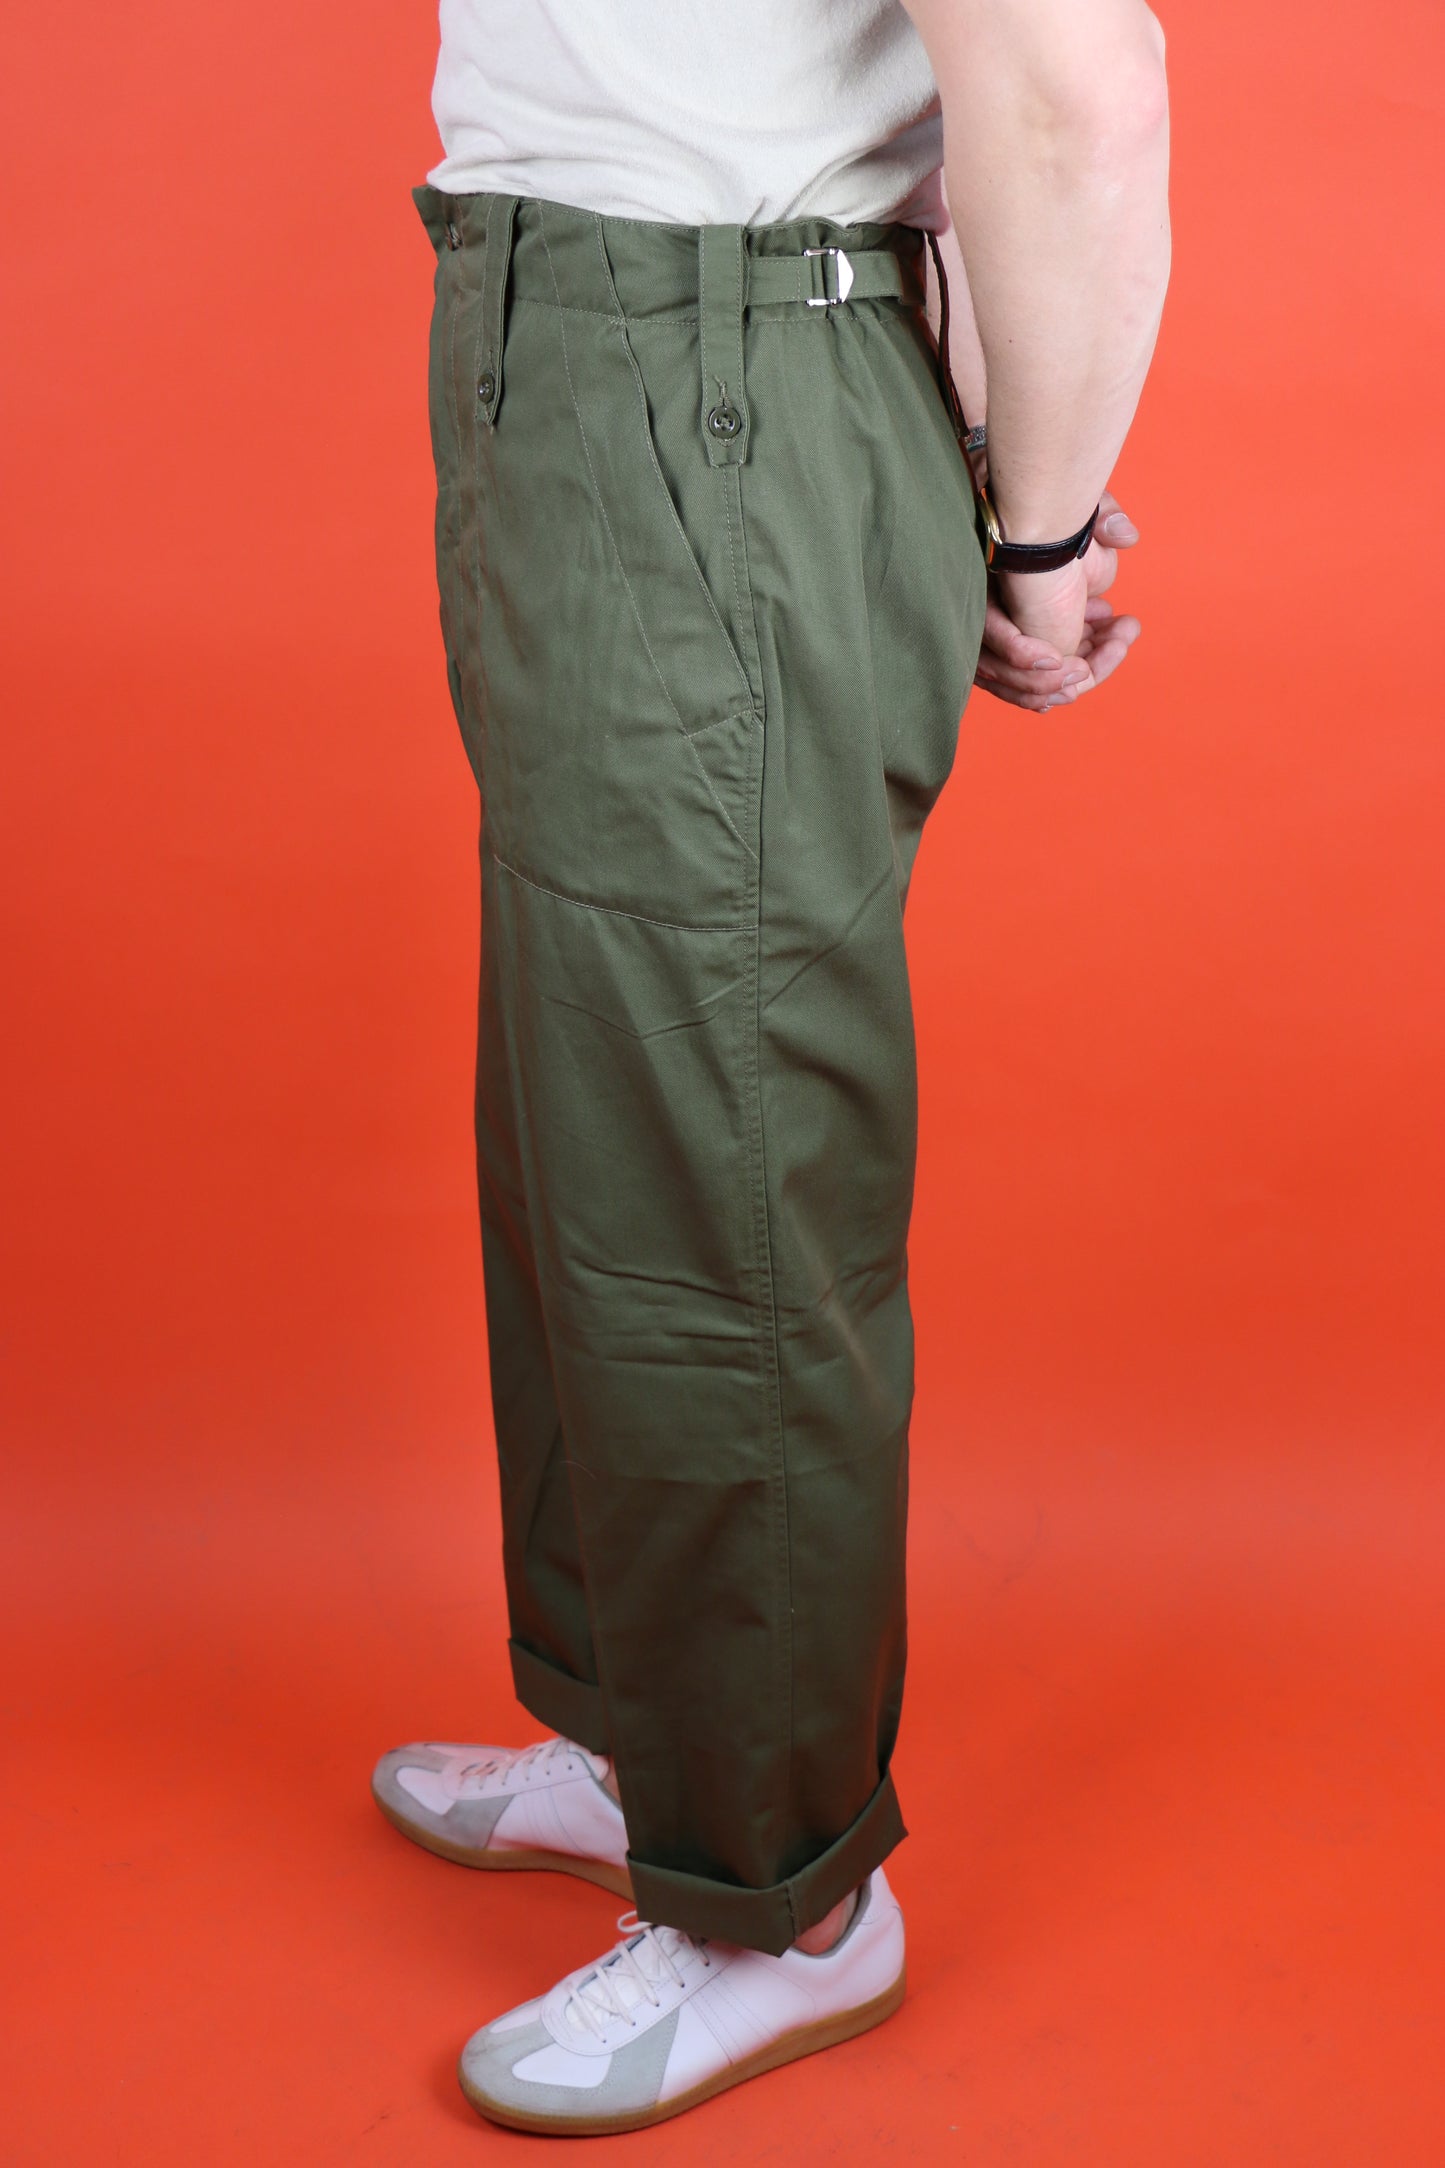 British Army Fatigue Pants - vintage clothing clochard92.com